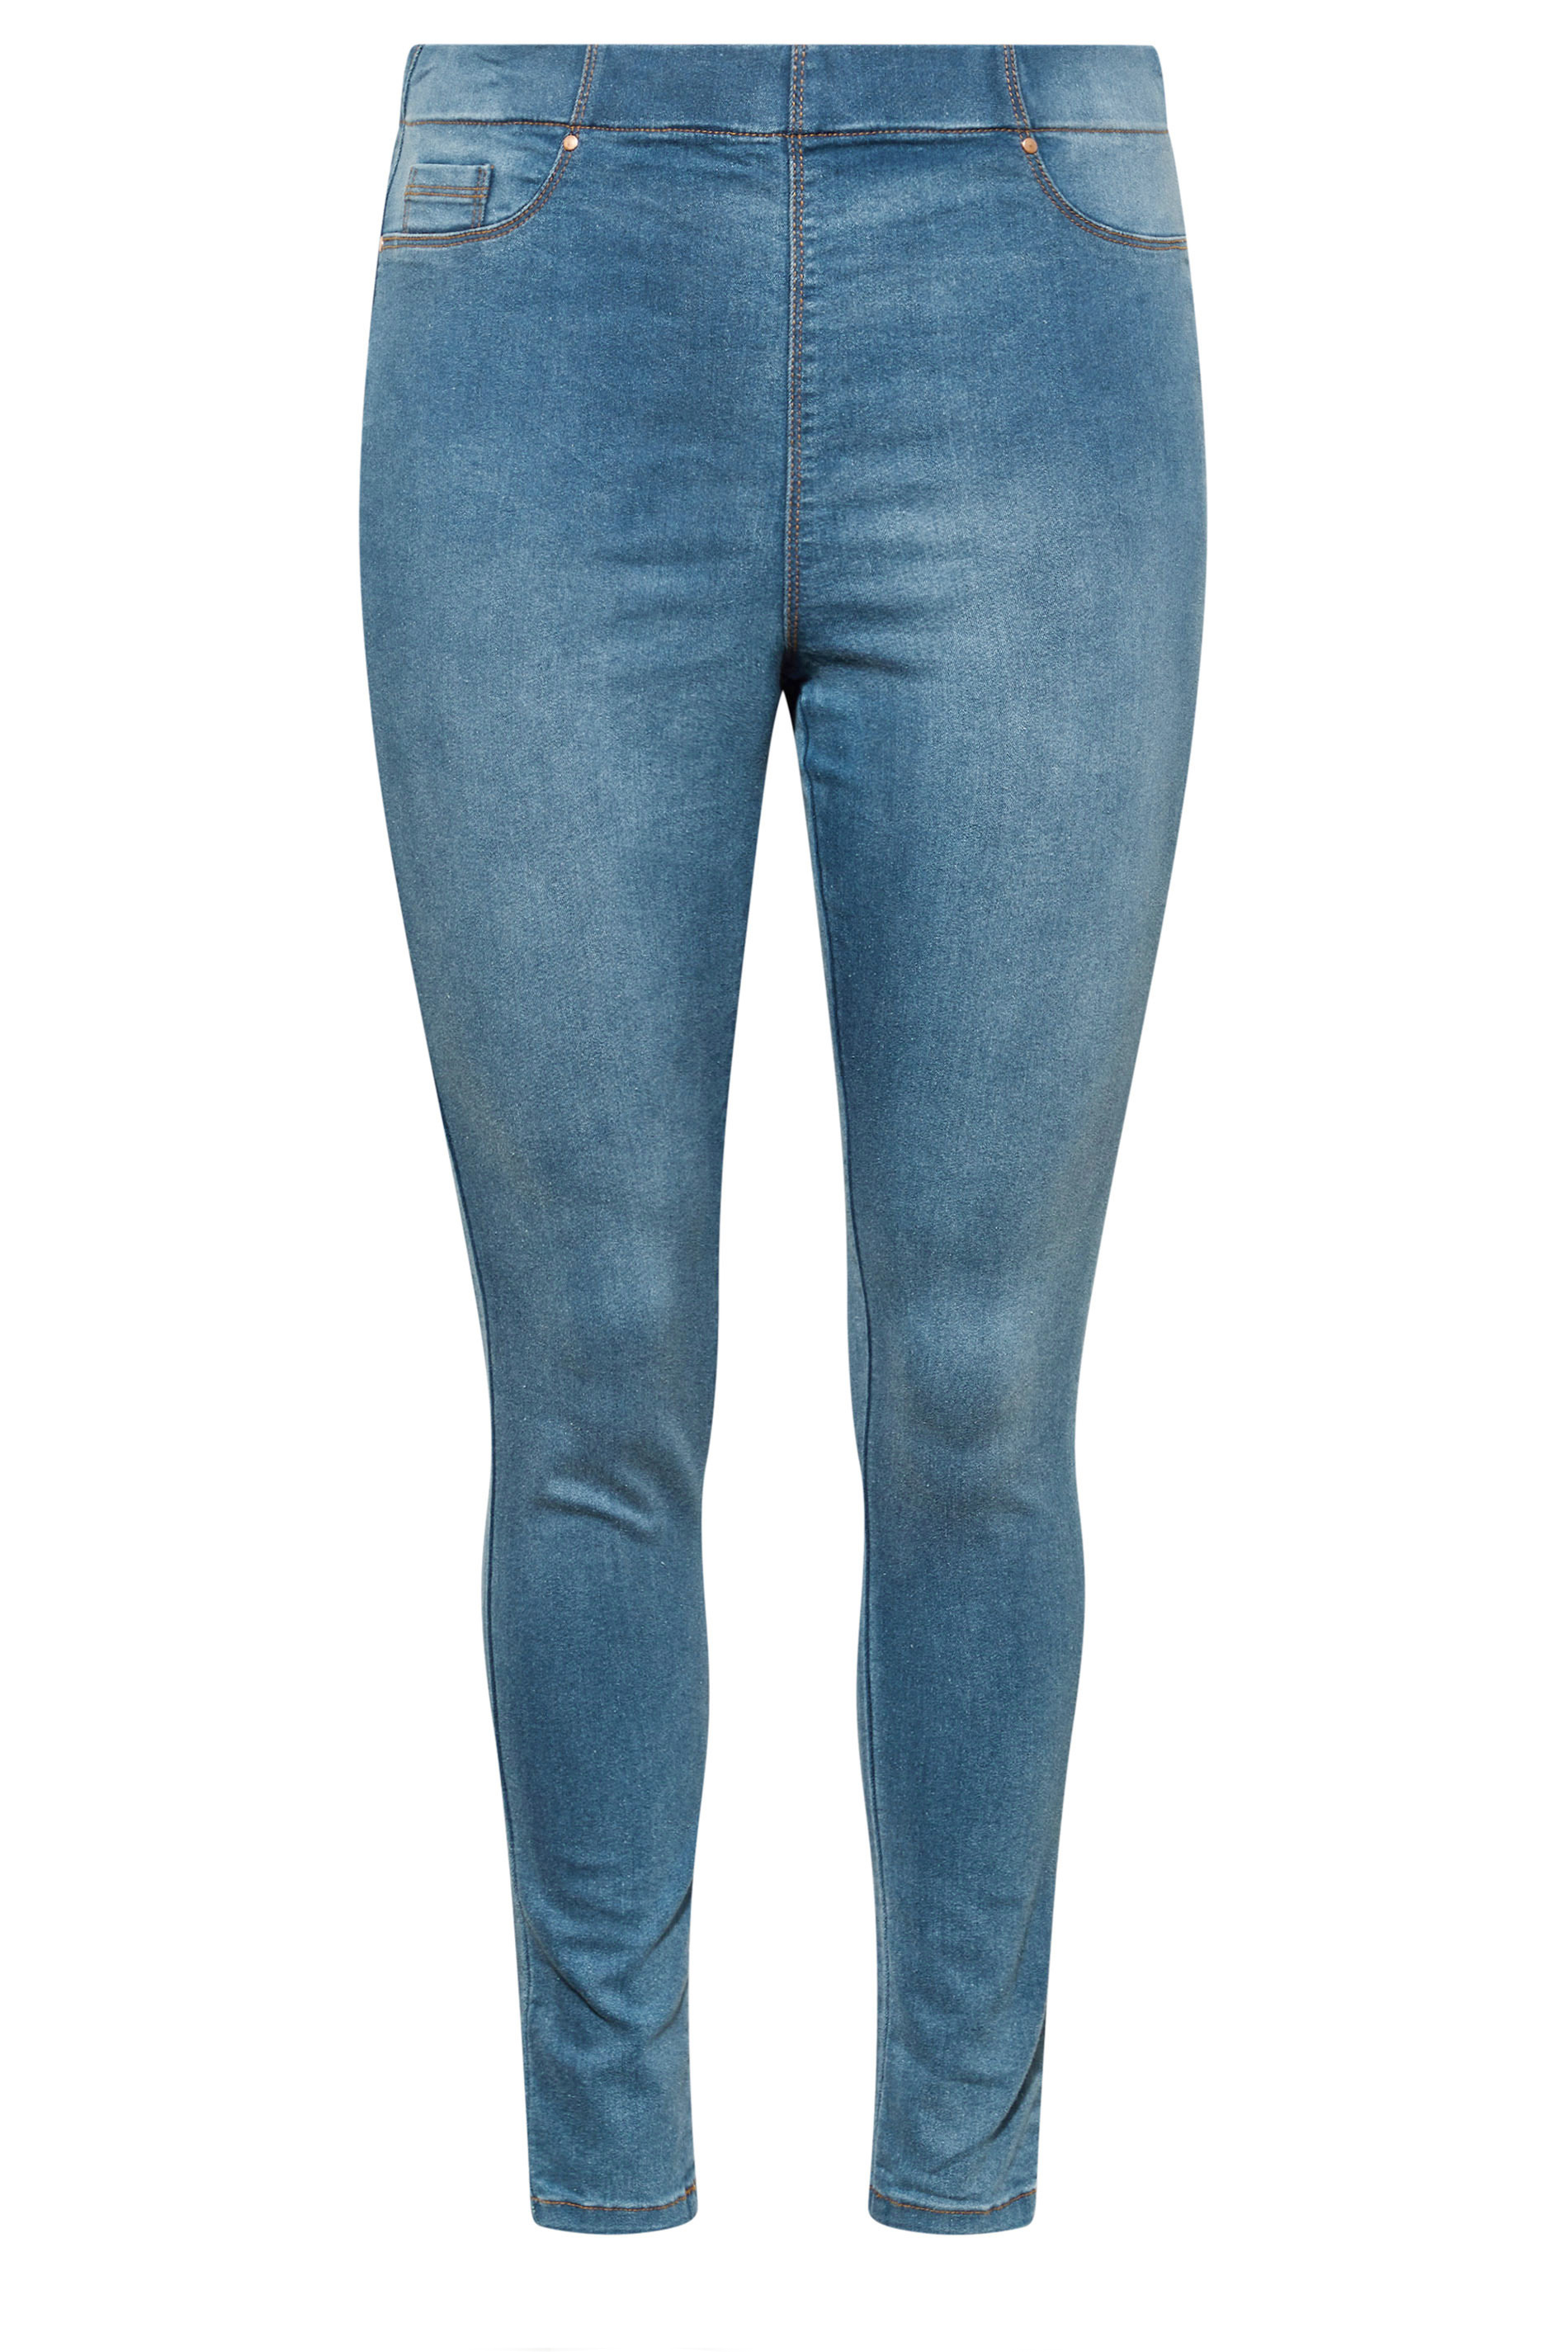 Buy online Purple Cotton Jeggings from Jeans & jeggings for Women